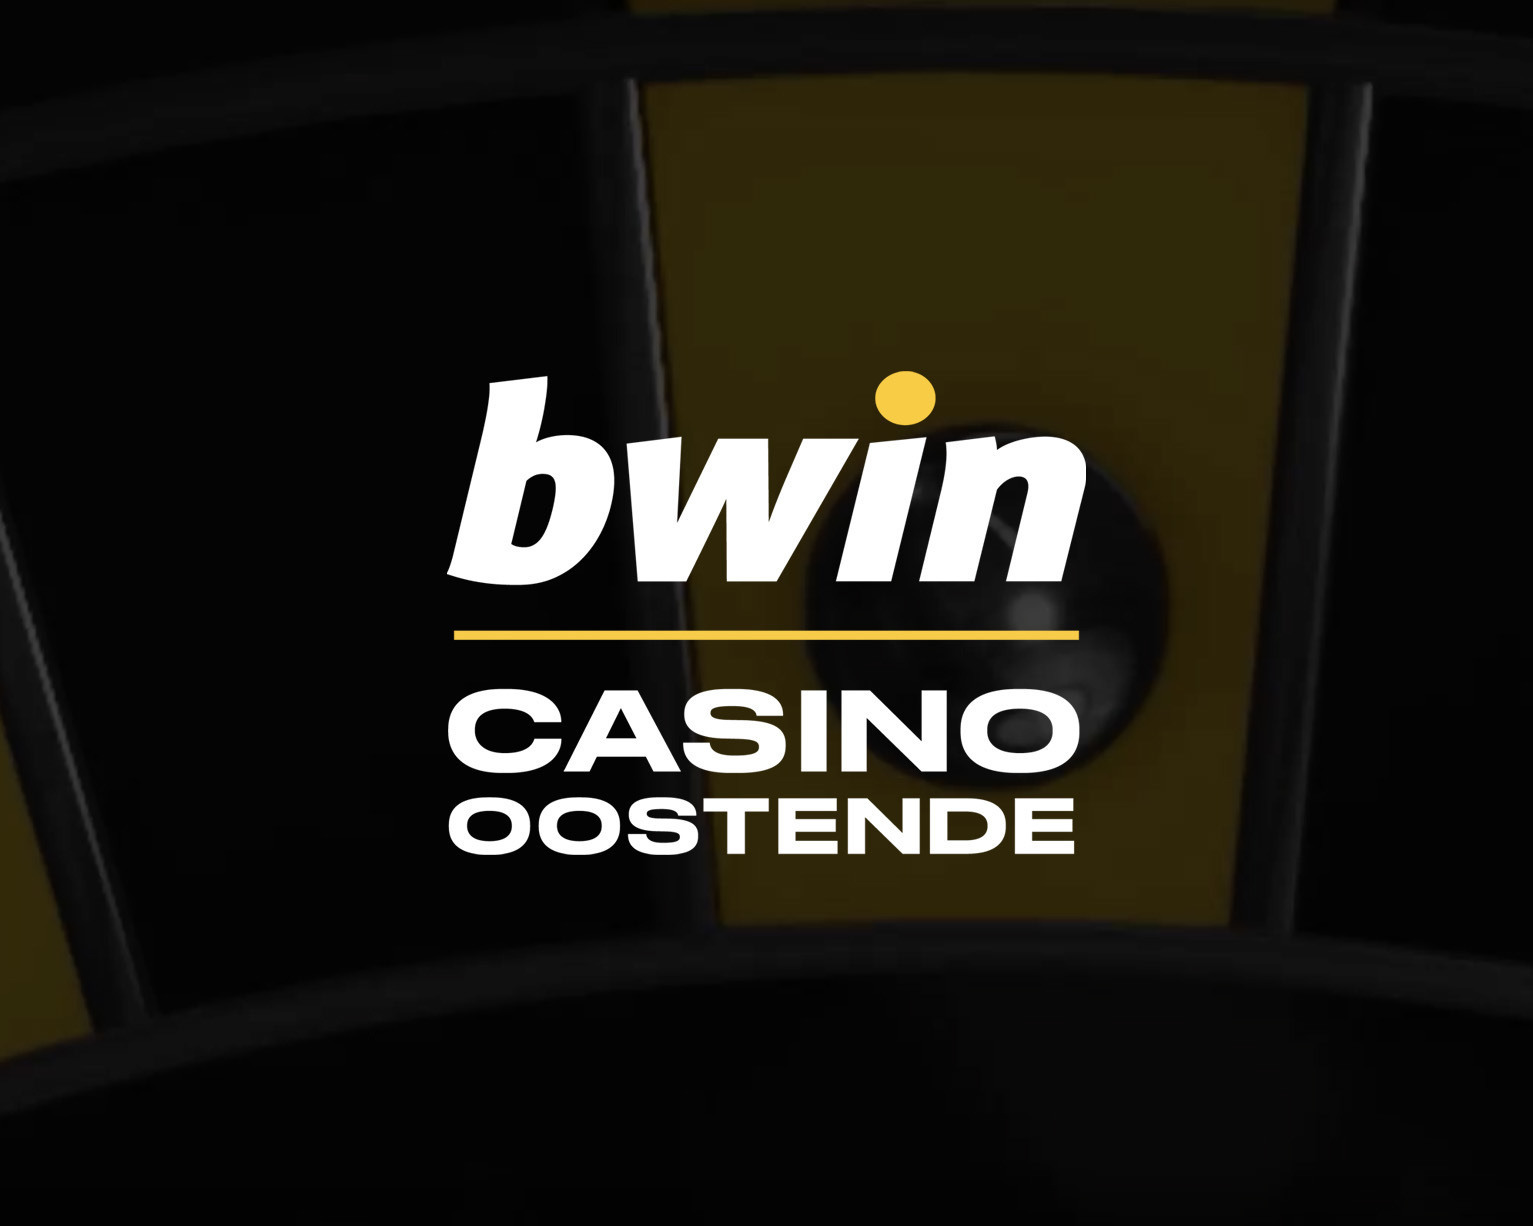 Bwin casino oostende nieuwe eigenaar